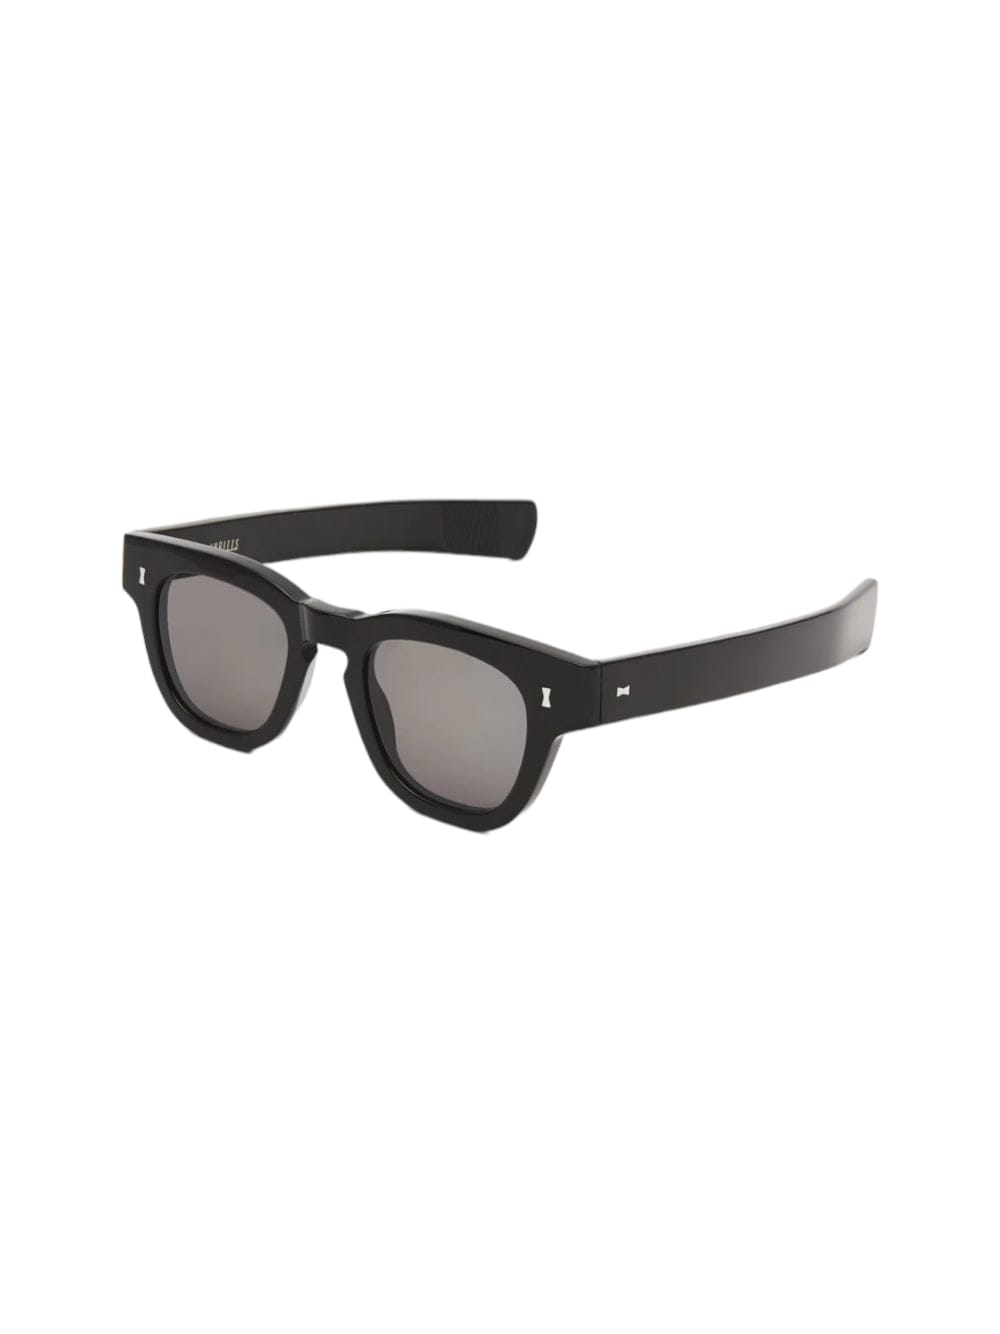 Cubitts Cruishank - Black Sunglasses